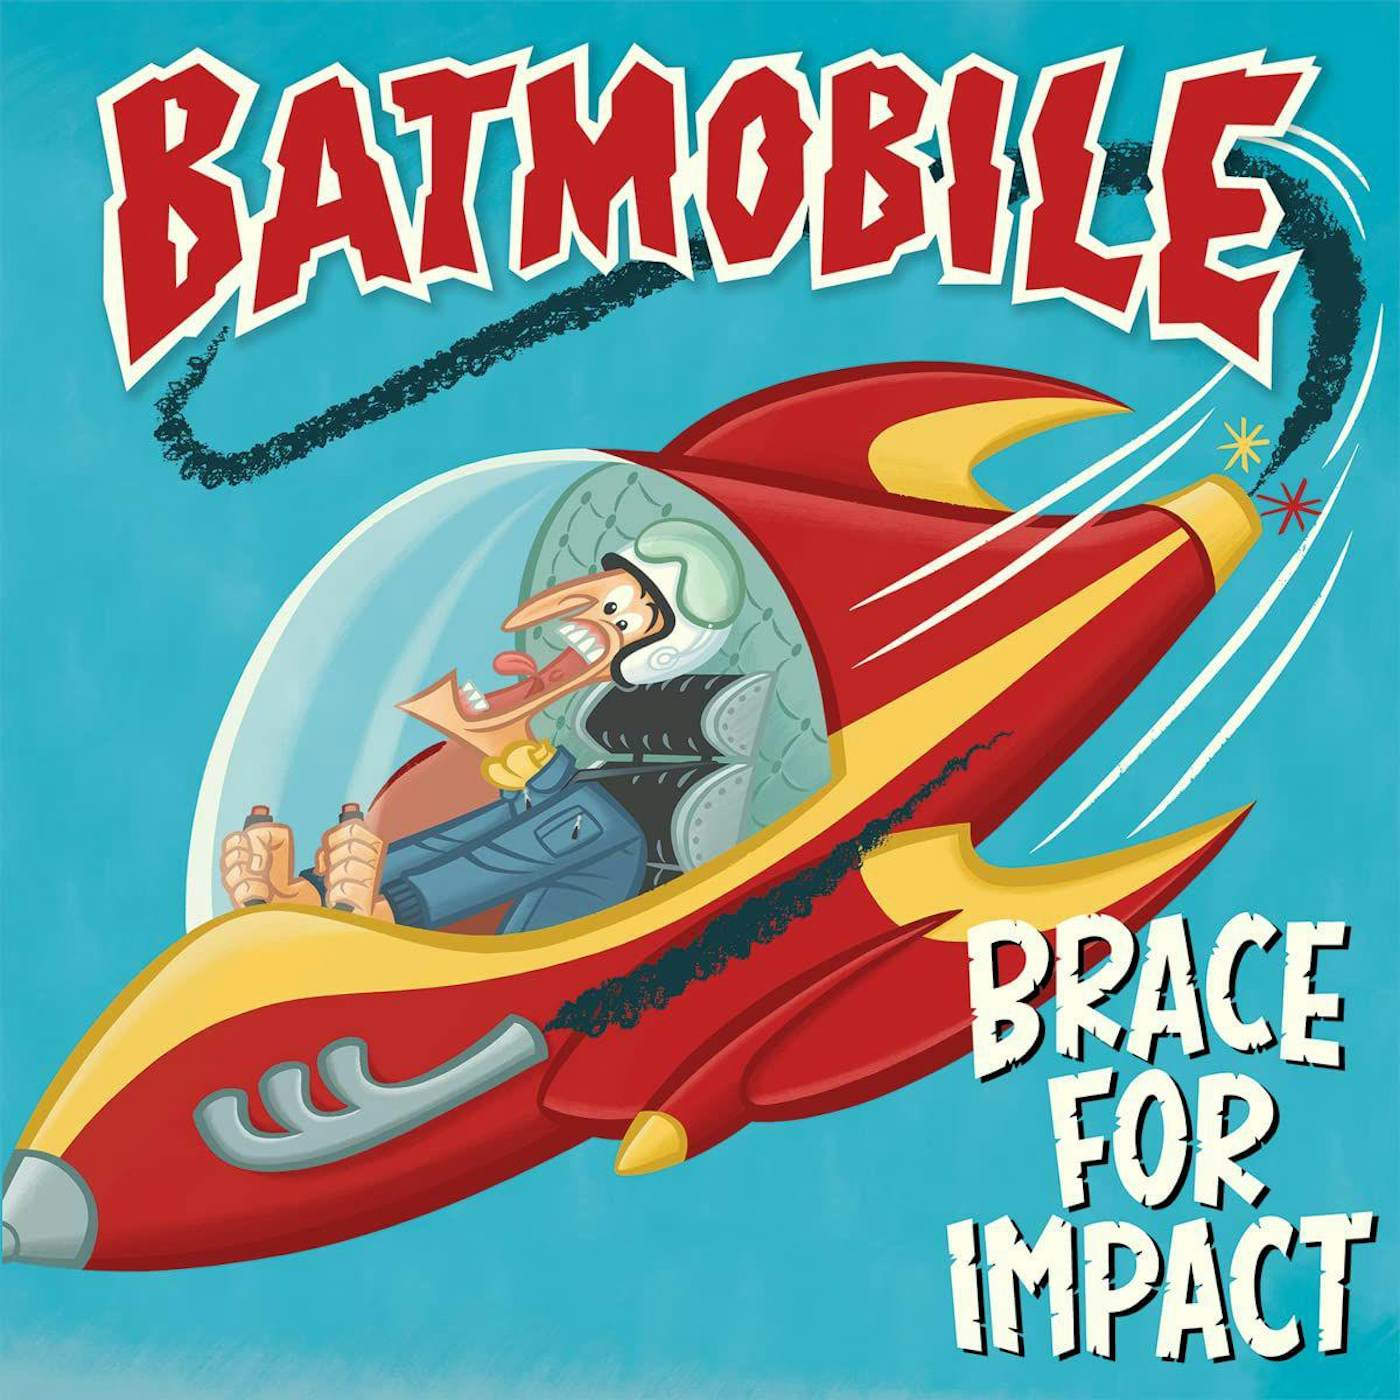 Batmobile BRACE FOR IMPACT (LIMITED/TRANSLUCENT YELLOW/180G) Vinyl Record